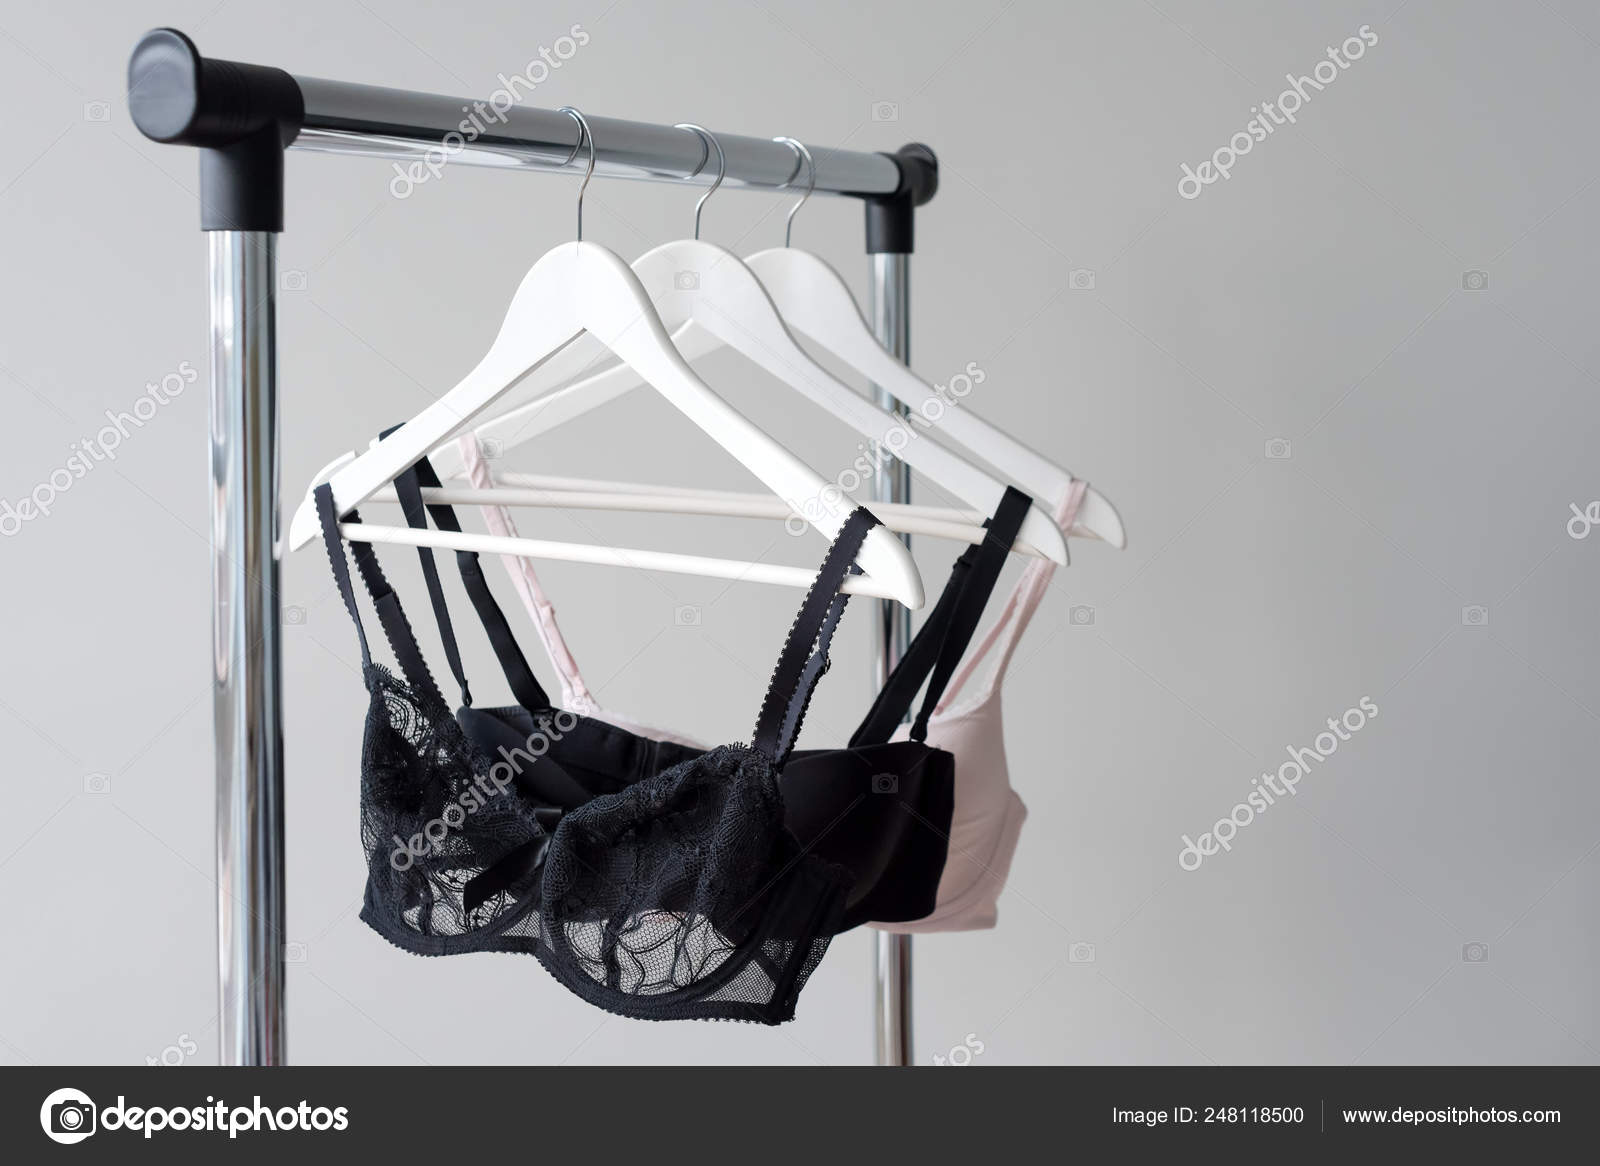 Vareity of bra hanging on a hanger. Textile, Underwear. Female bra